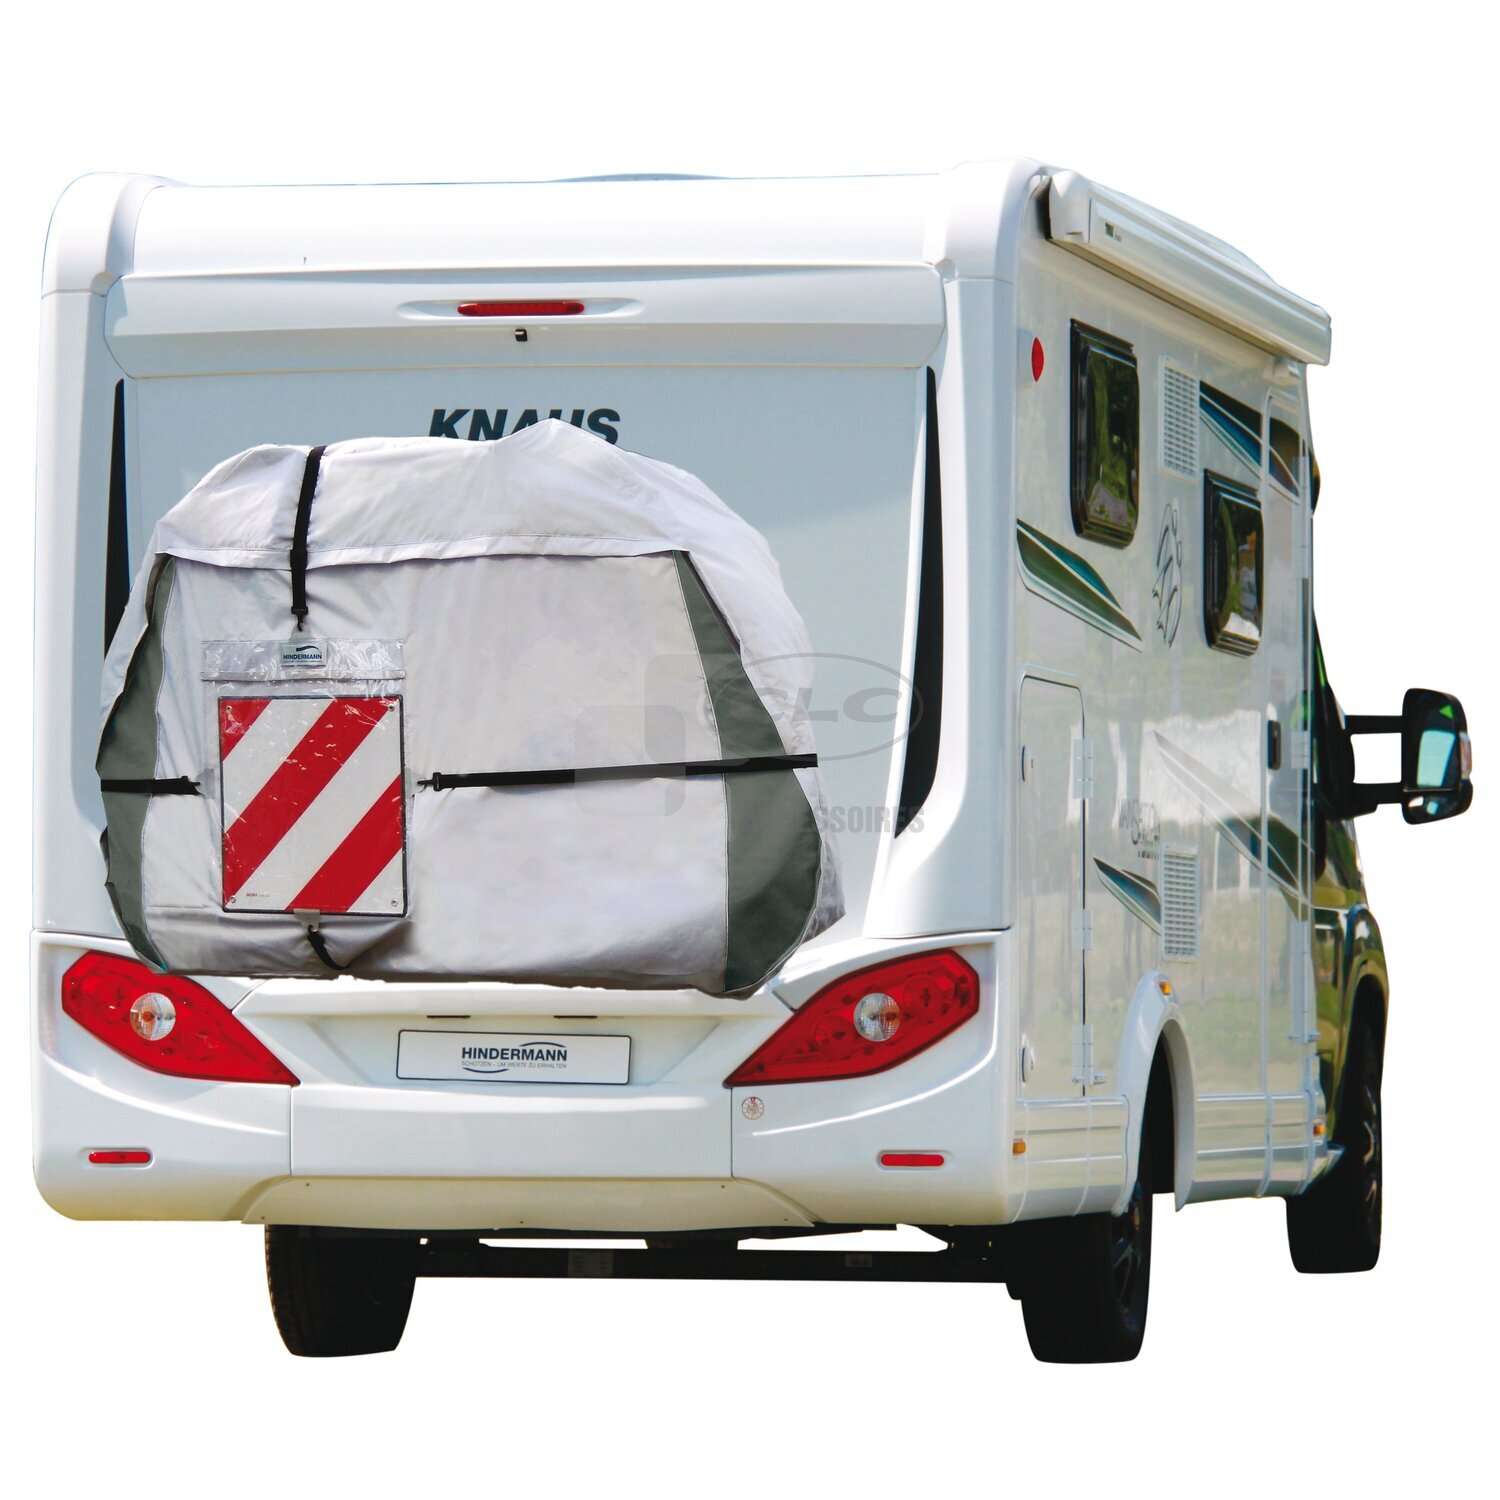 Housse velo camping car - Équipement caravaning